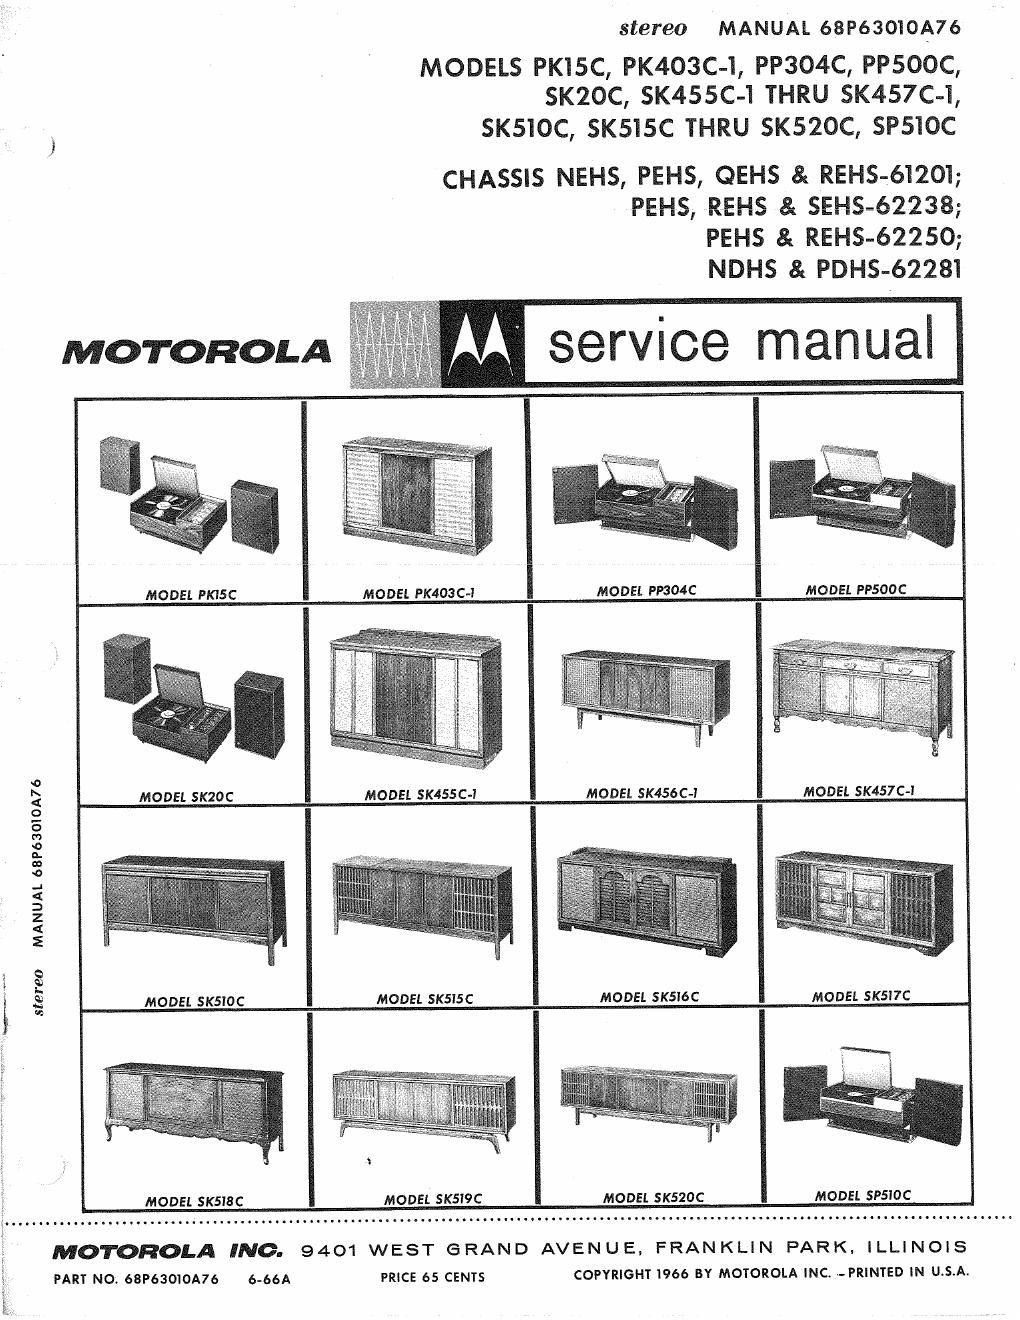 motorola sk 20 c service manual